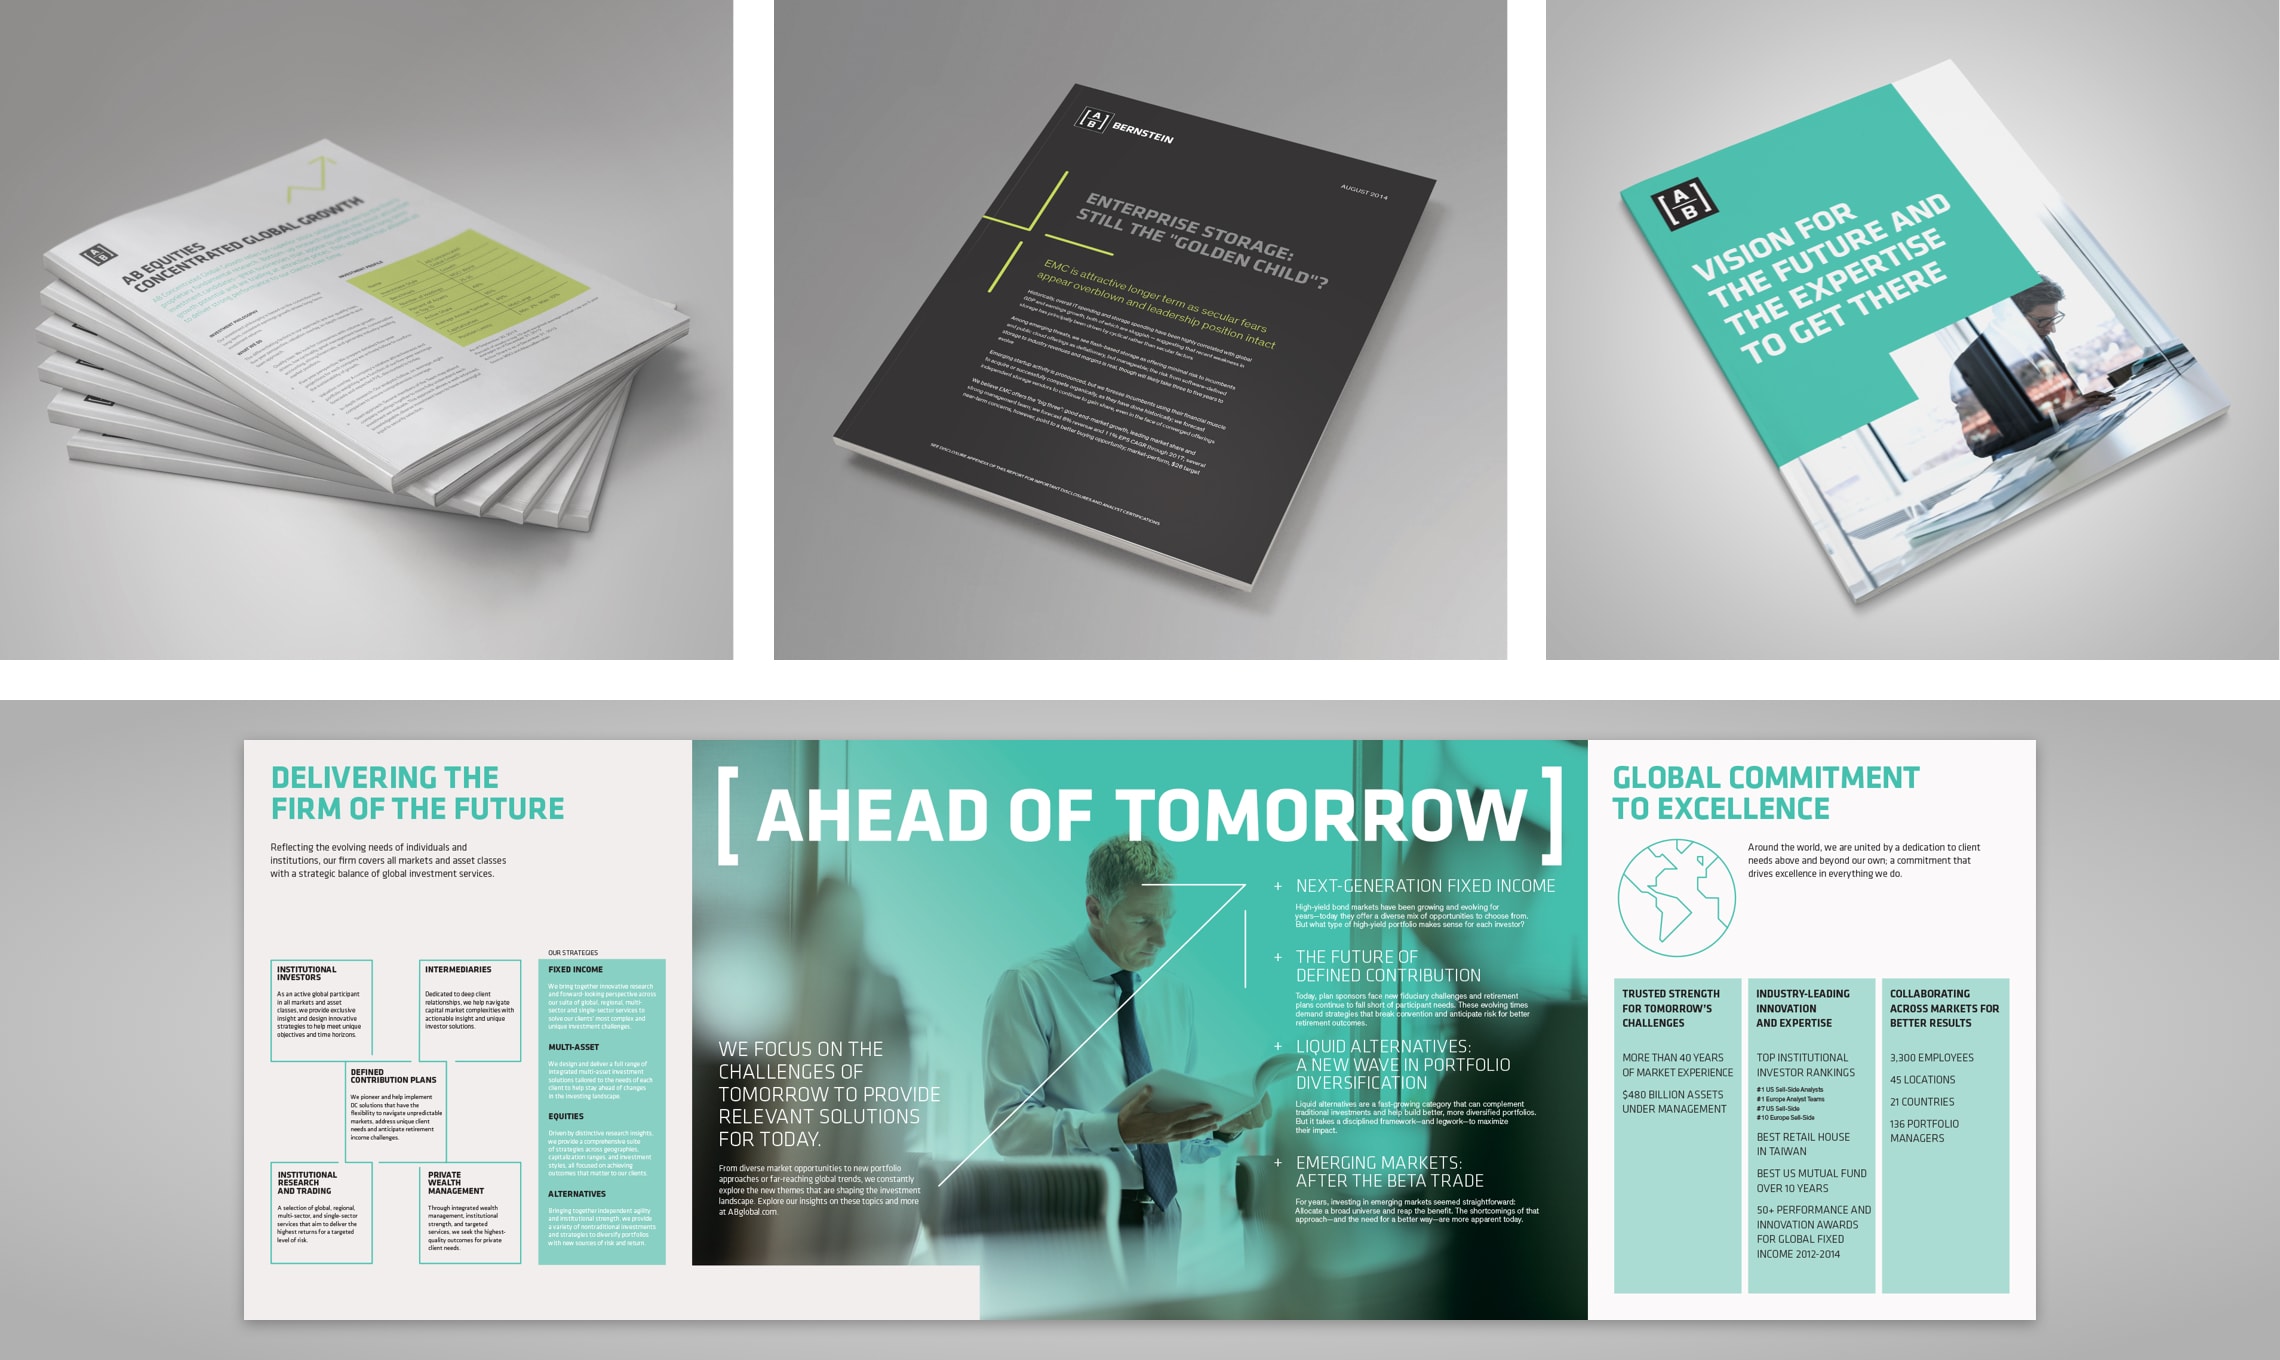 A set of business brochures showcasing a uniform design system.